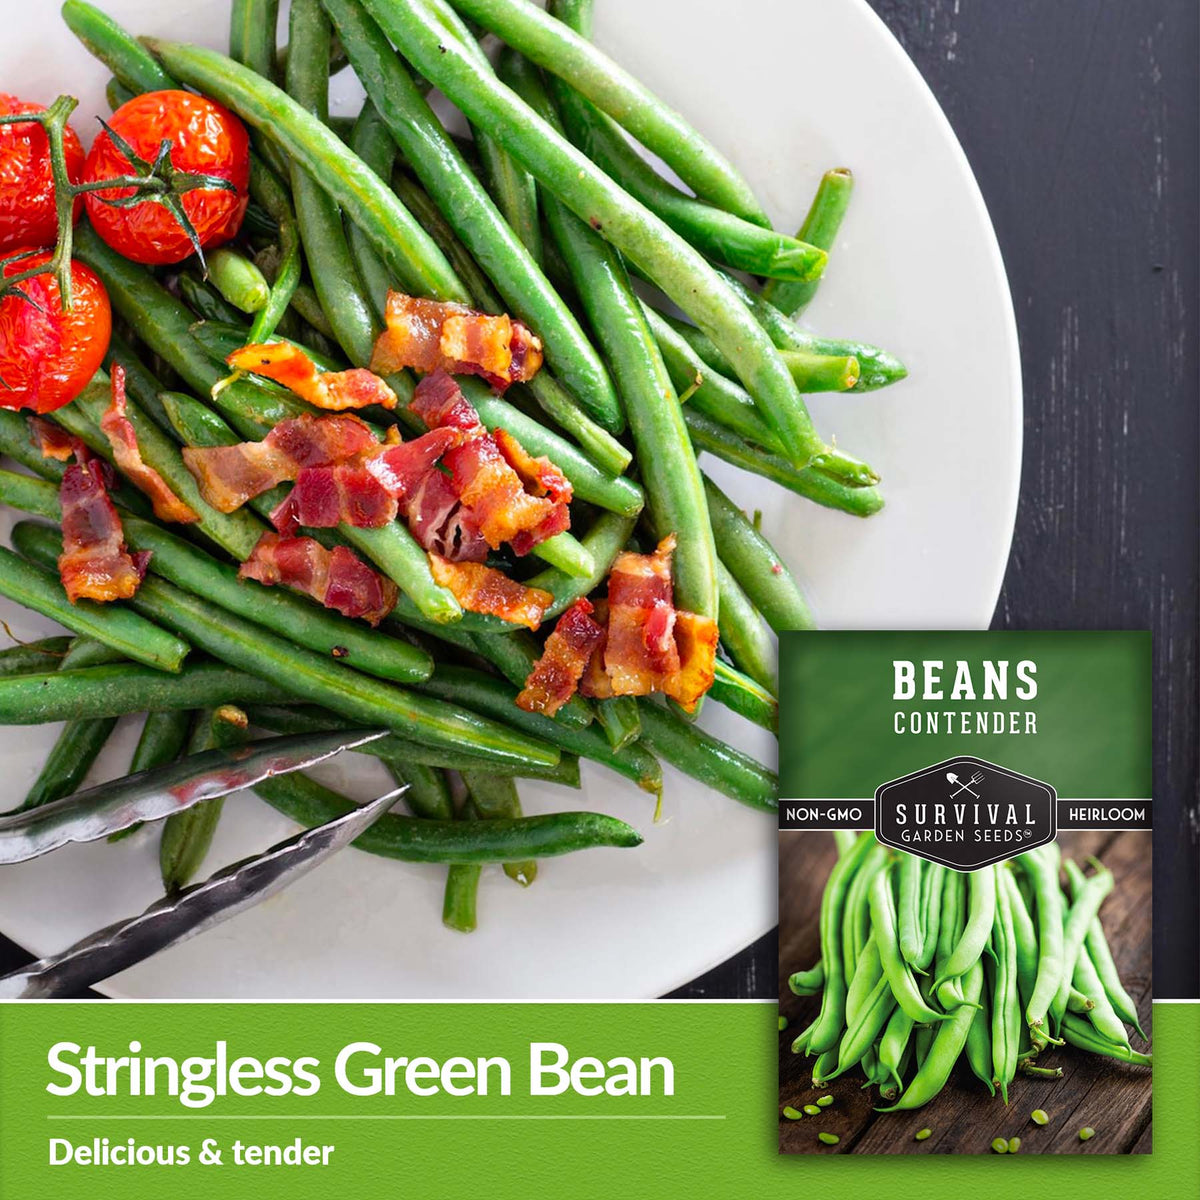 Contender Beans are a stringless green bean